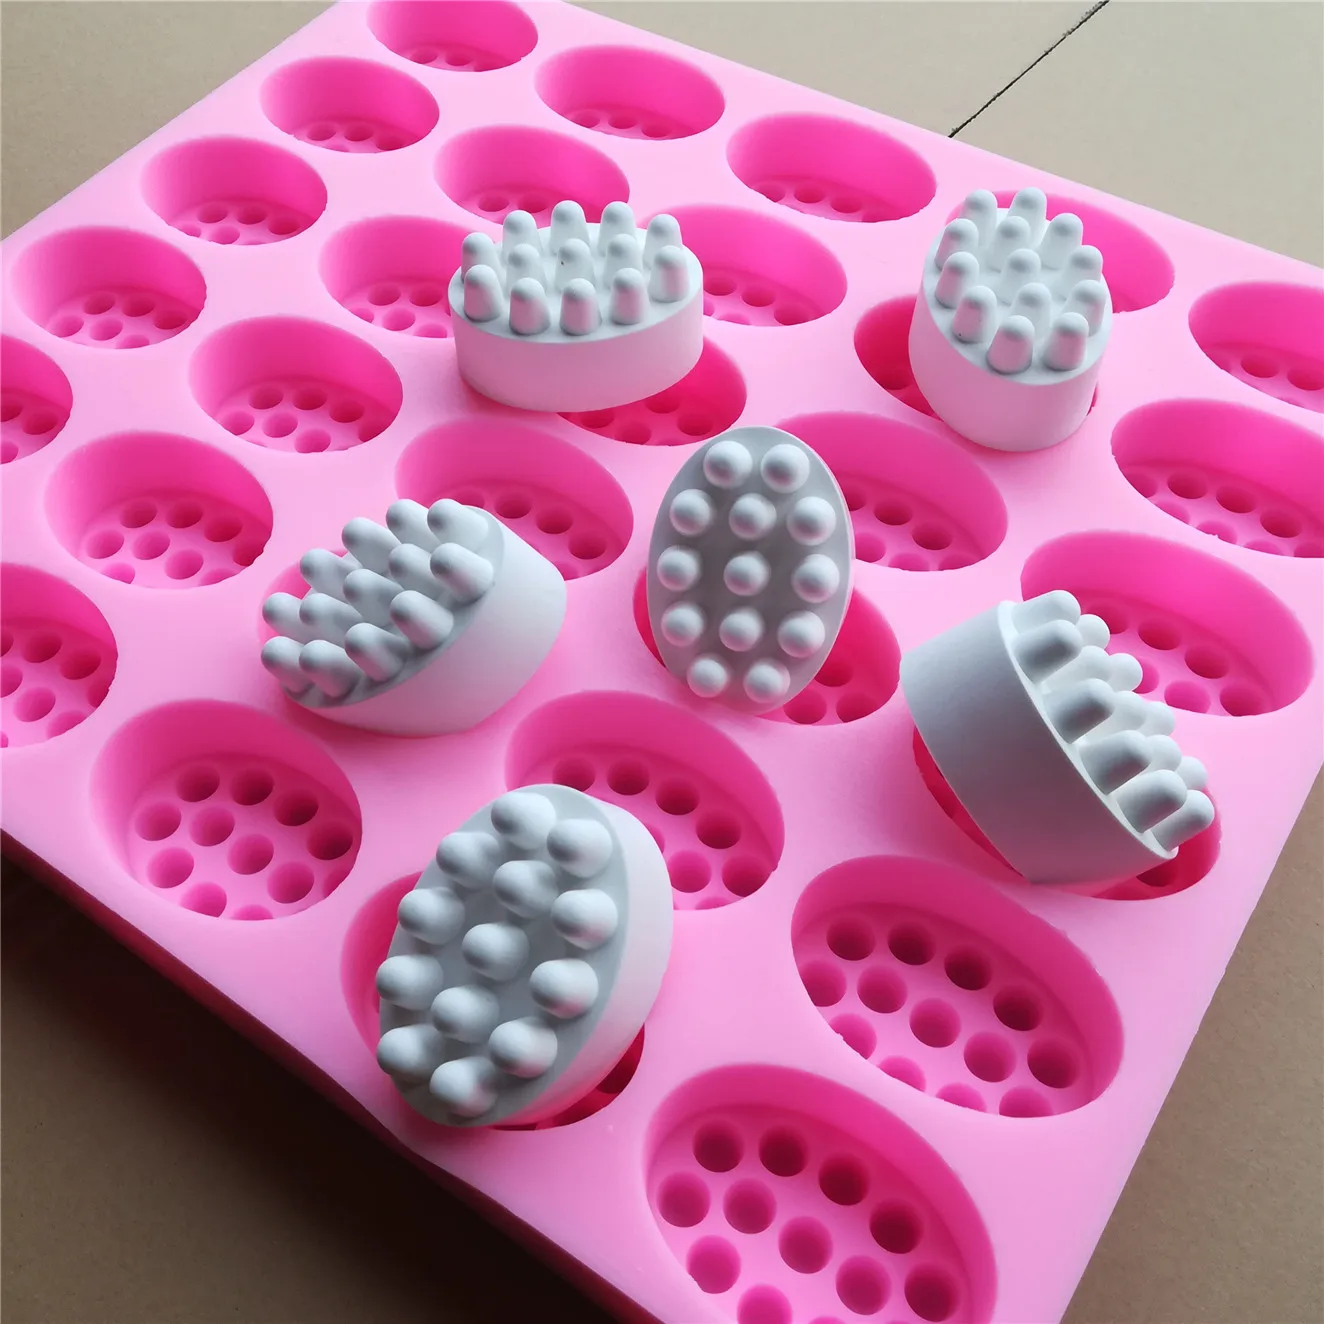 6 Cavity Silicone Soap Molds Square Rectangle Shape Handmade Soap